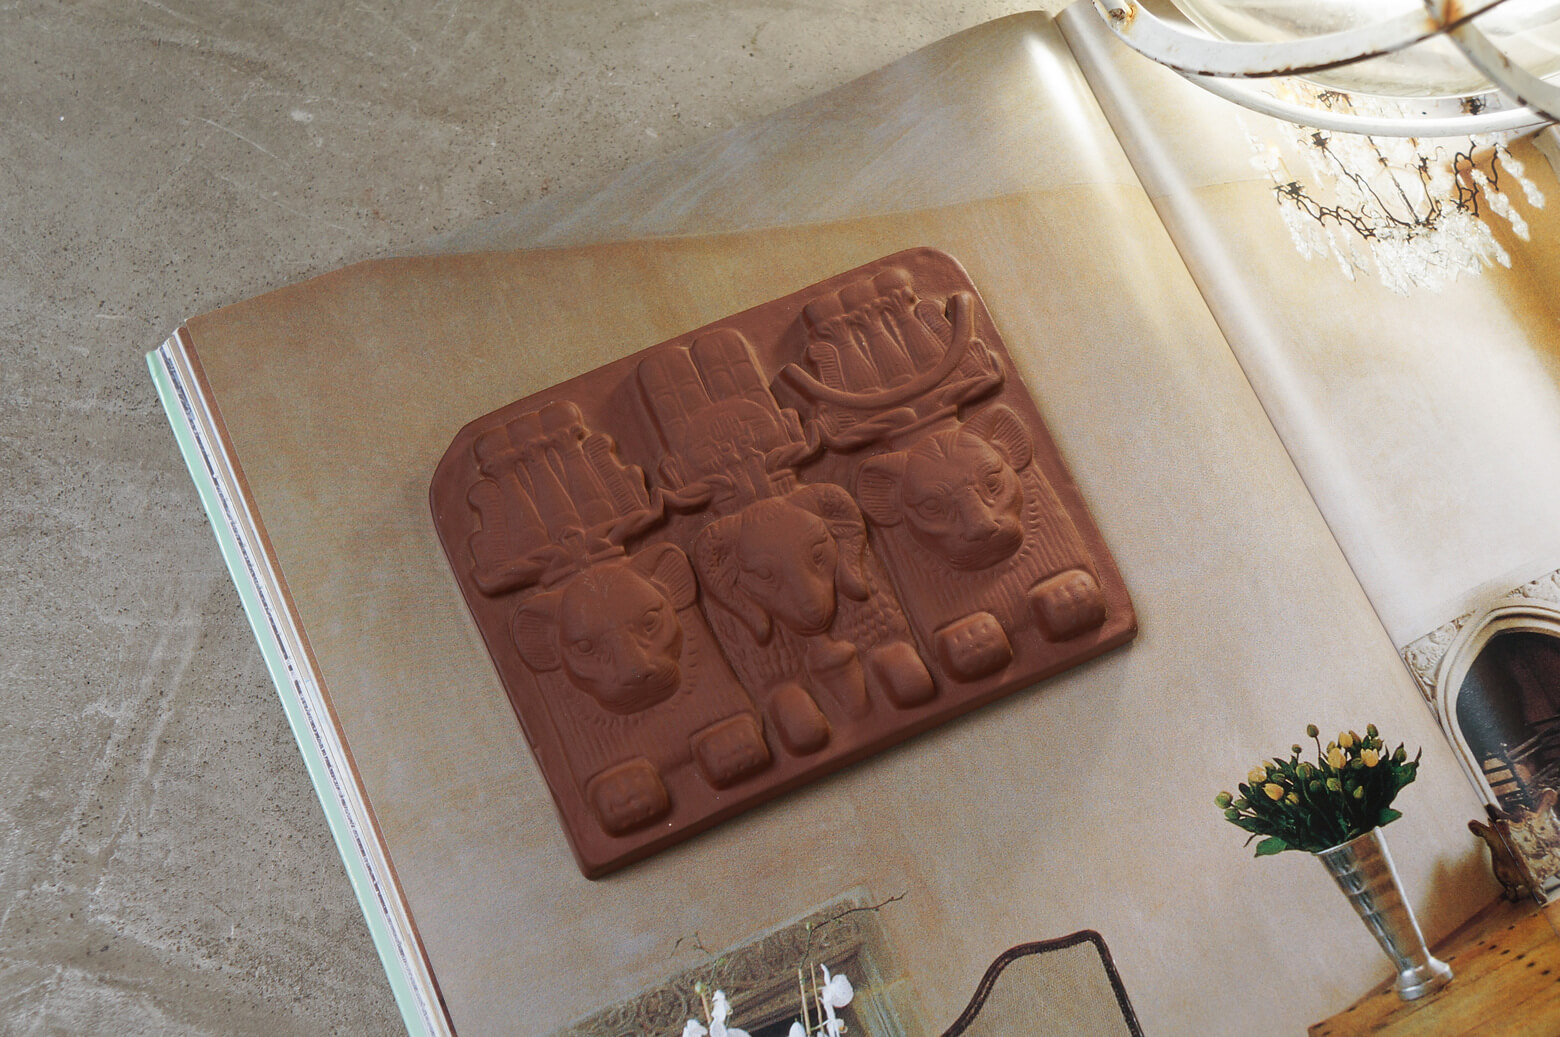 Meissen Egypt Civilization motif Ceramic board / マイセン エジプト文明 モチーフ 陶版